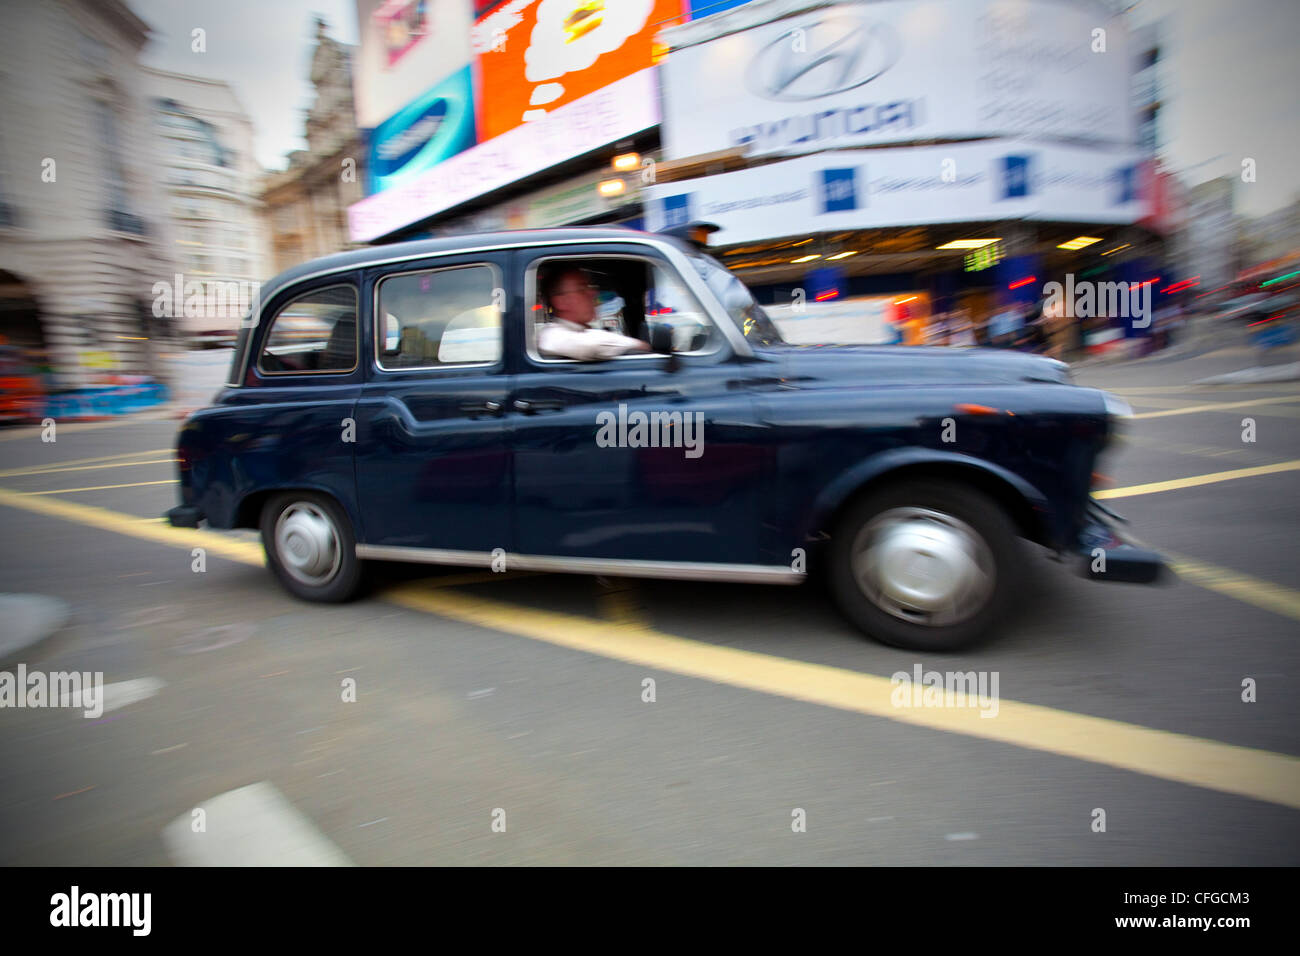 Iconic London black taxi cab Stock Photo